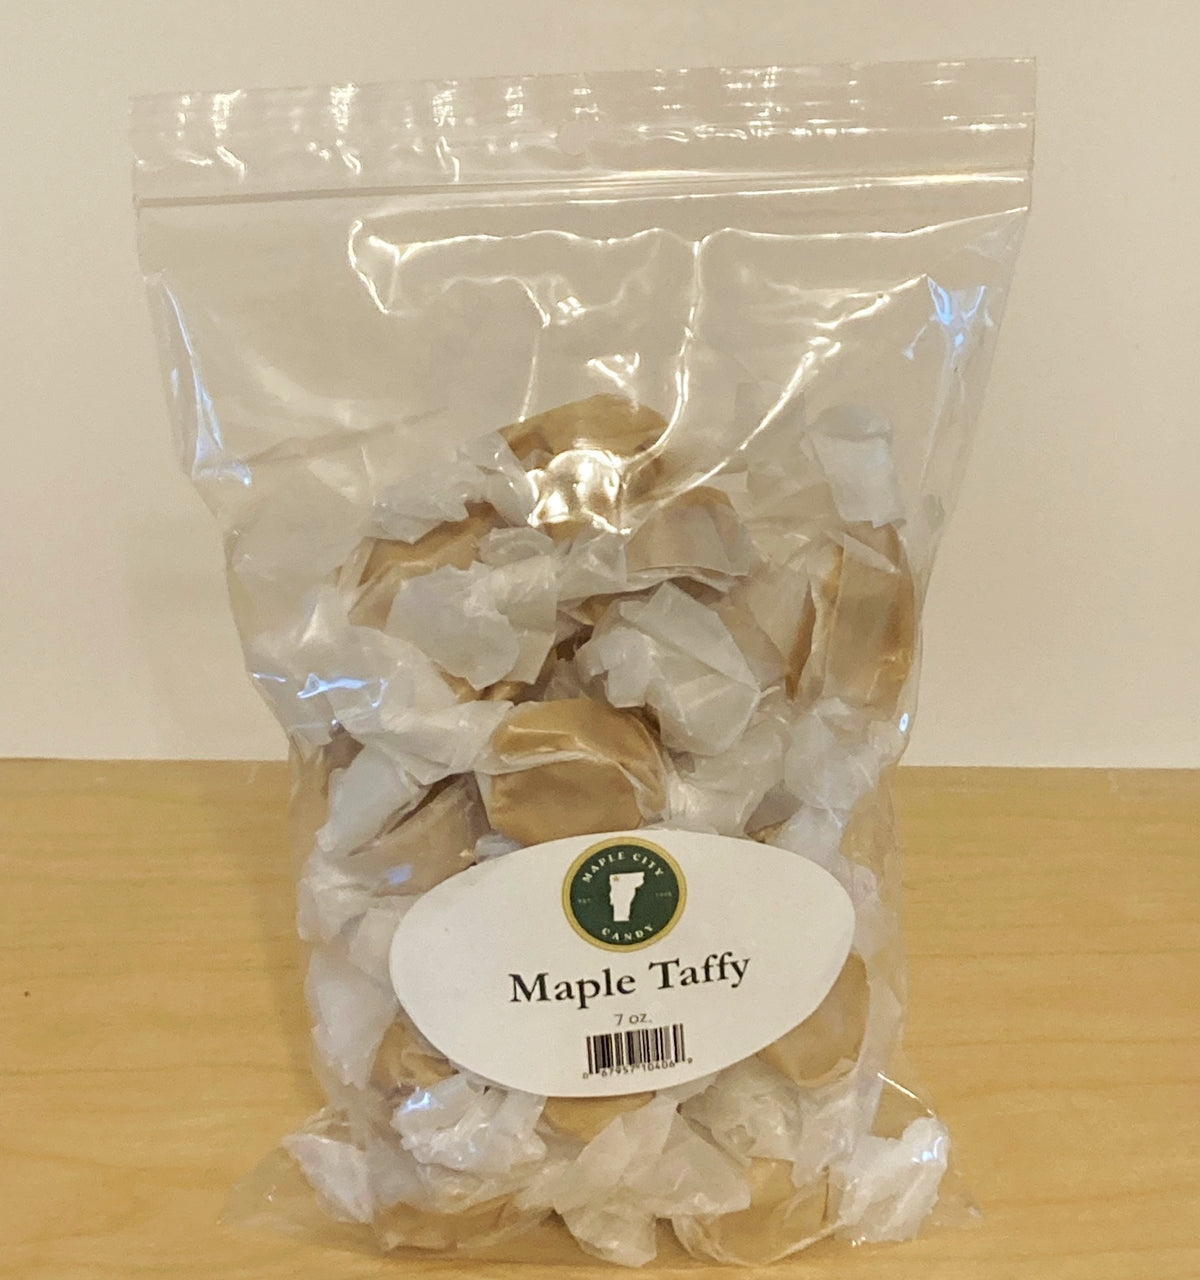 Maple City Candy Taffy, 7 oz. bag.